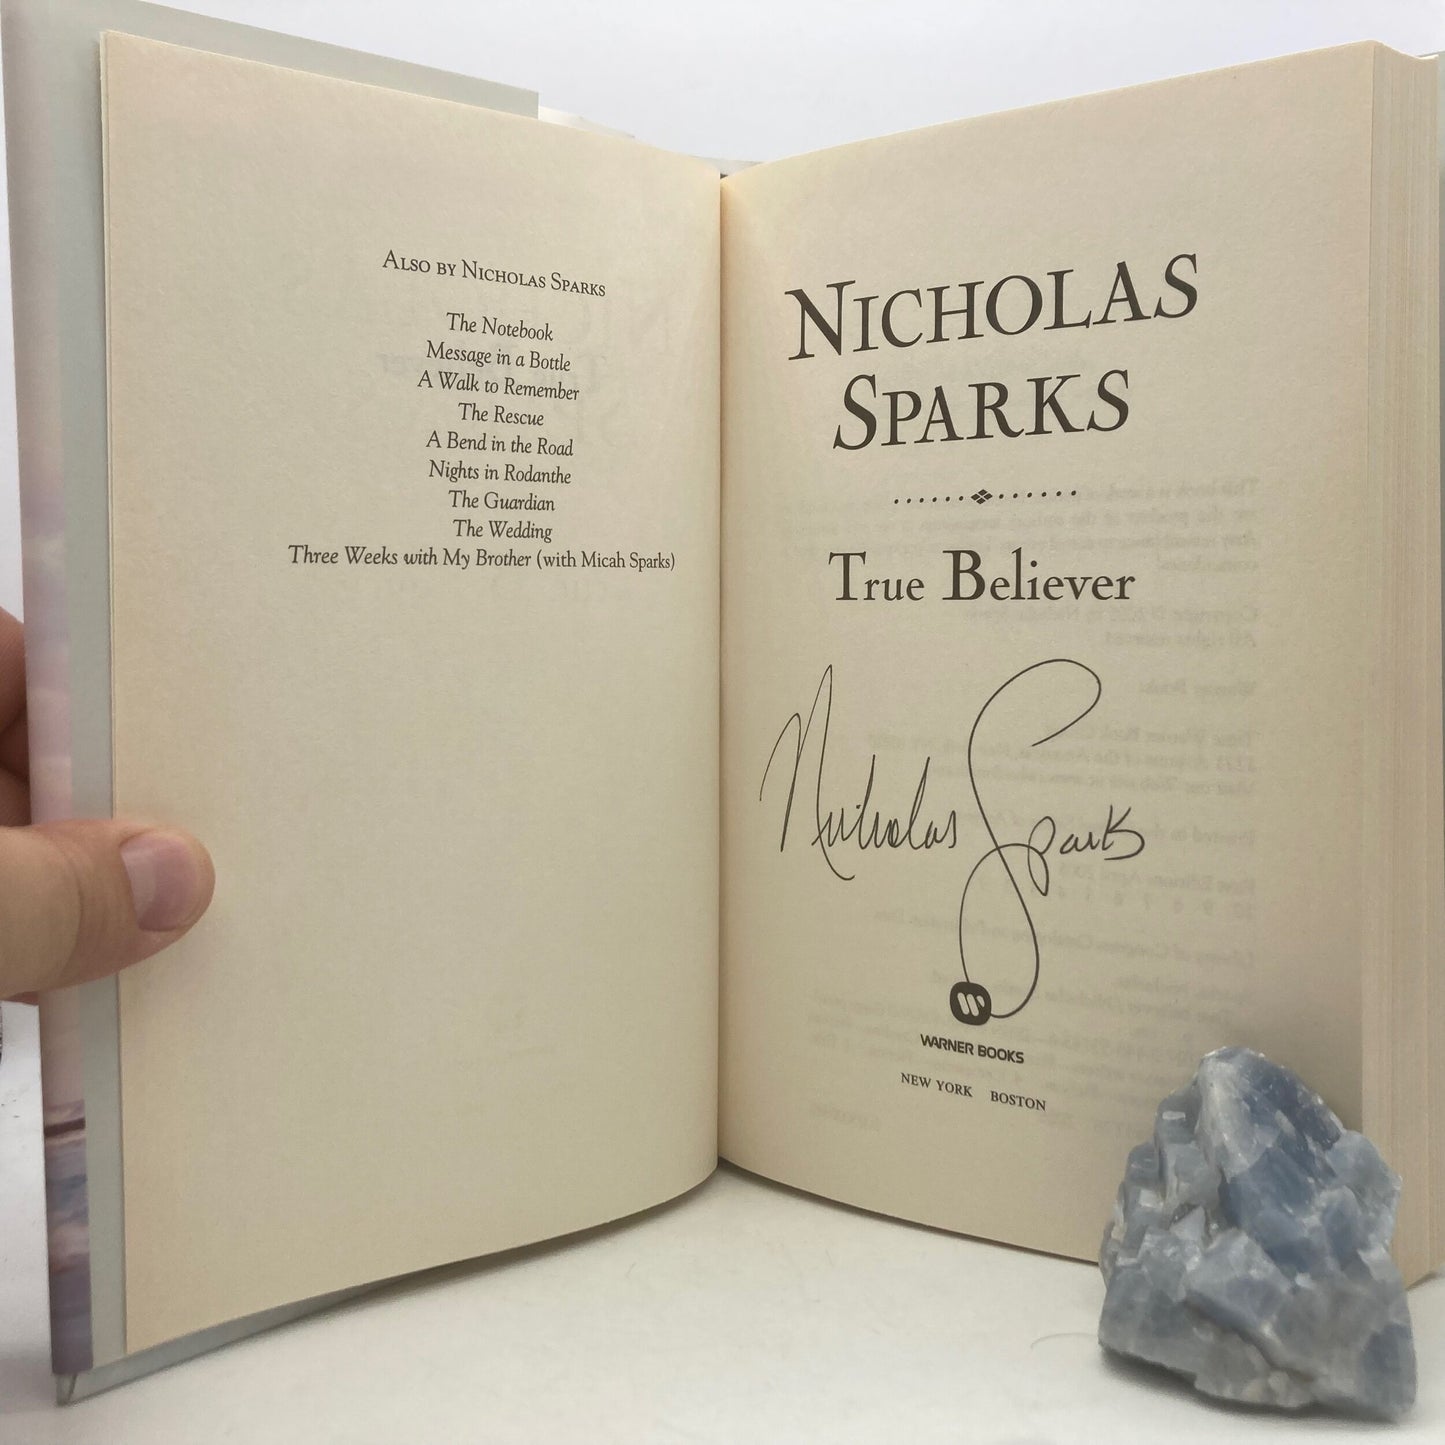 SPARKS, Nicholas "True Believer" [Warner, 2005] 1st Edition (Signed) - Buzz Bookstore